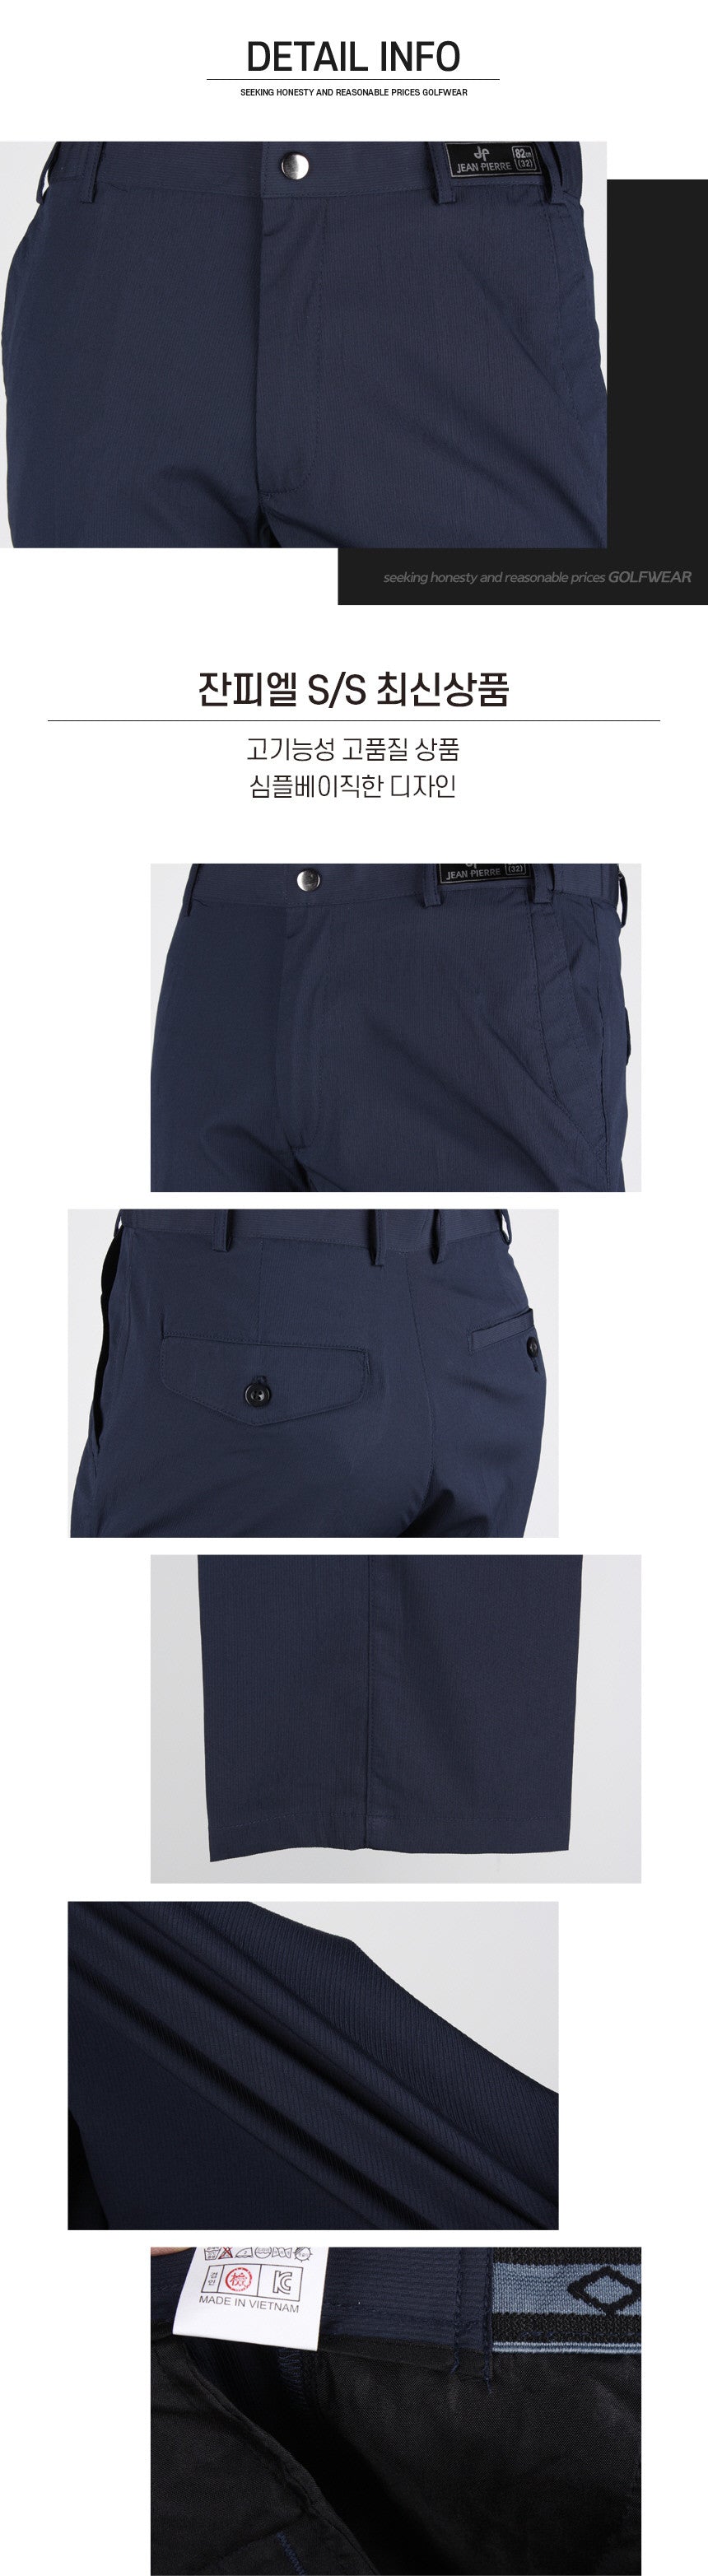 Black Spandex Golf Wear Trousers Mens Pants UV Cut Slim Fit Basic